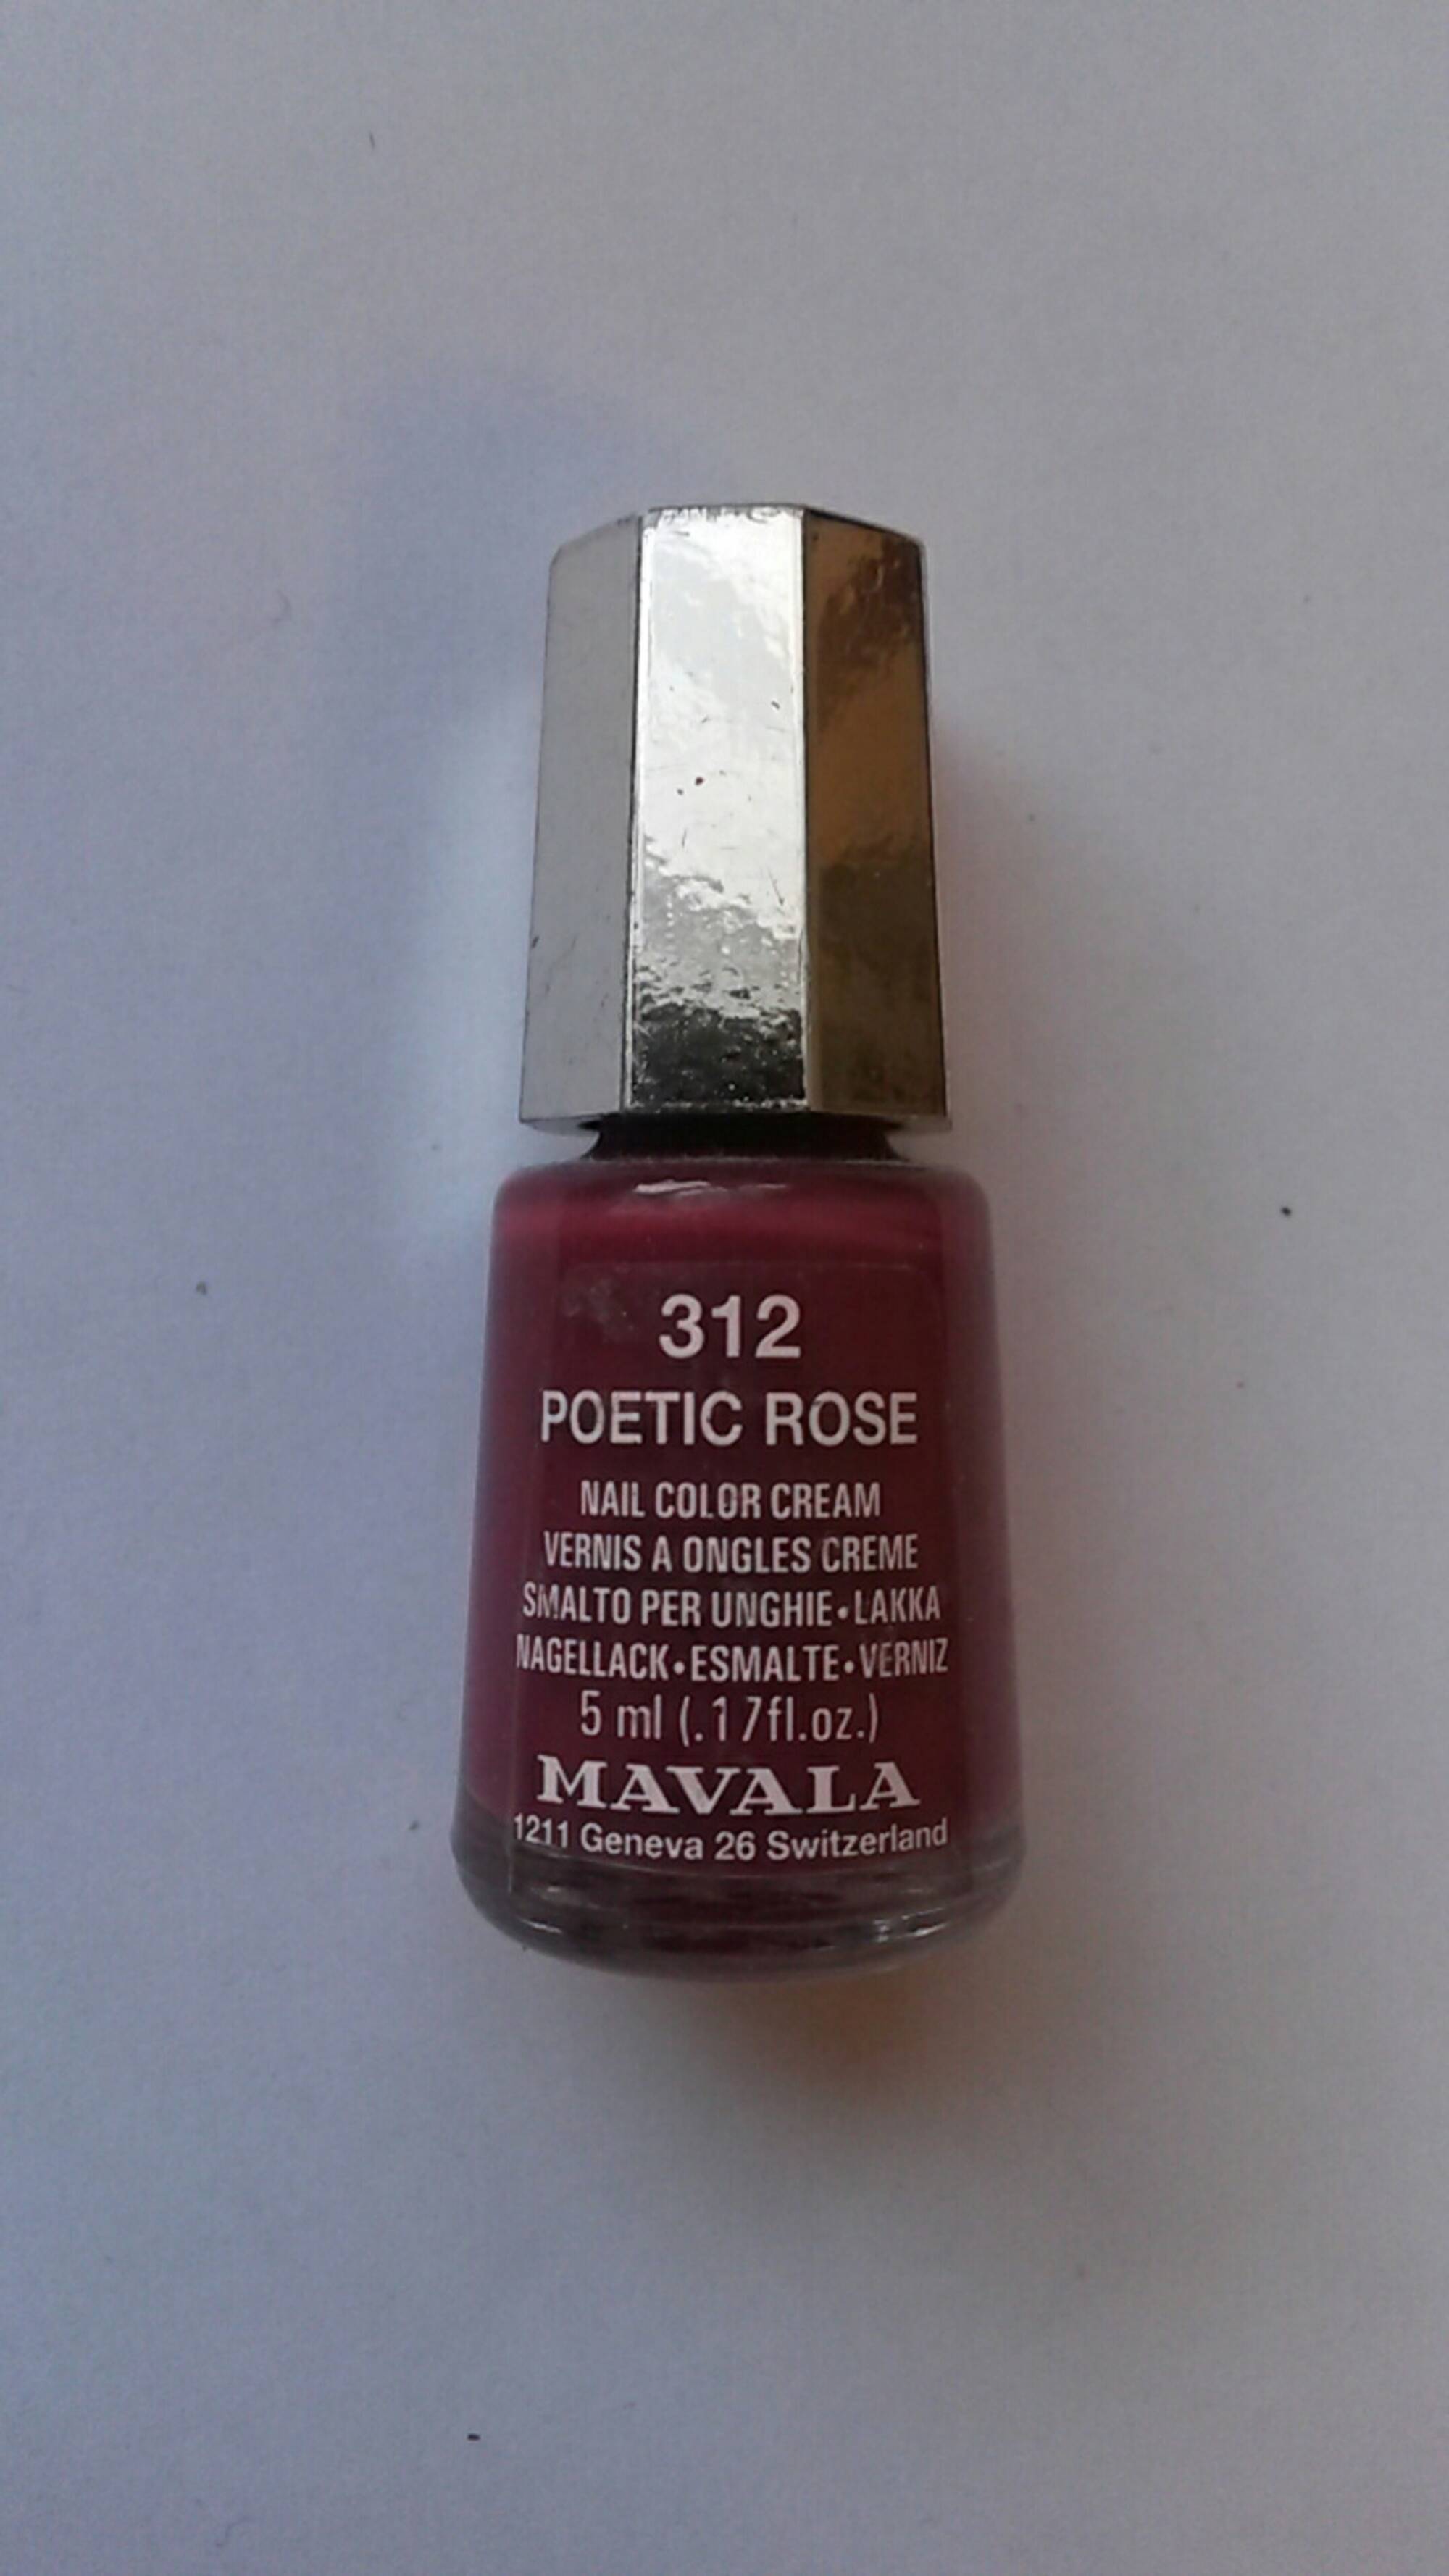 MAVALA - 312 Poetic rose - Vernis à ongles crème